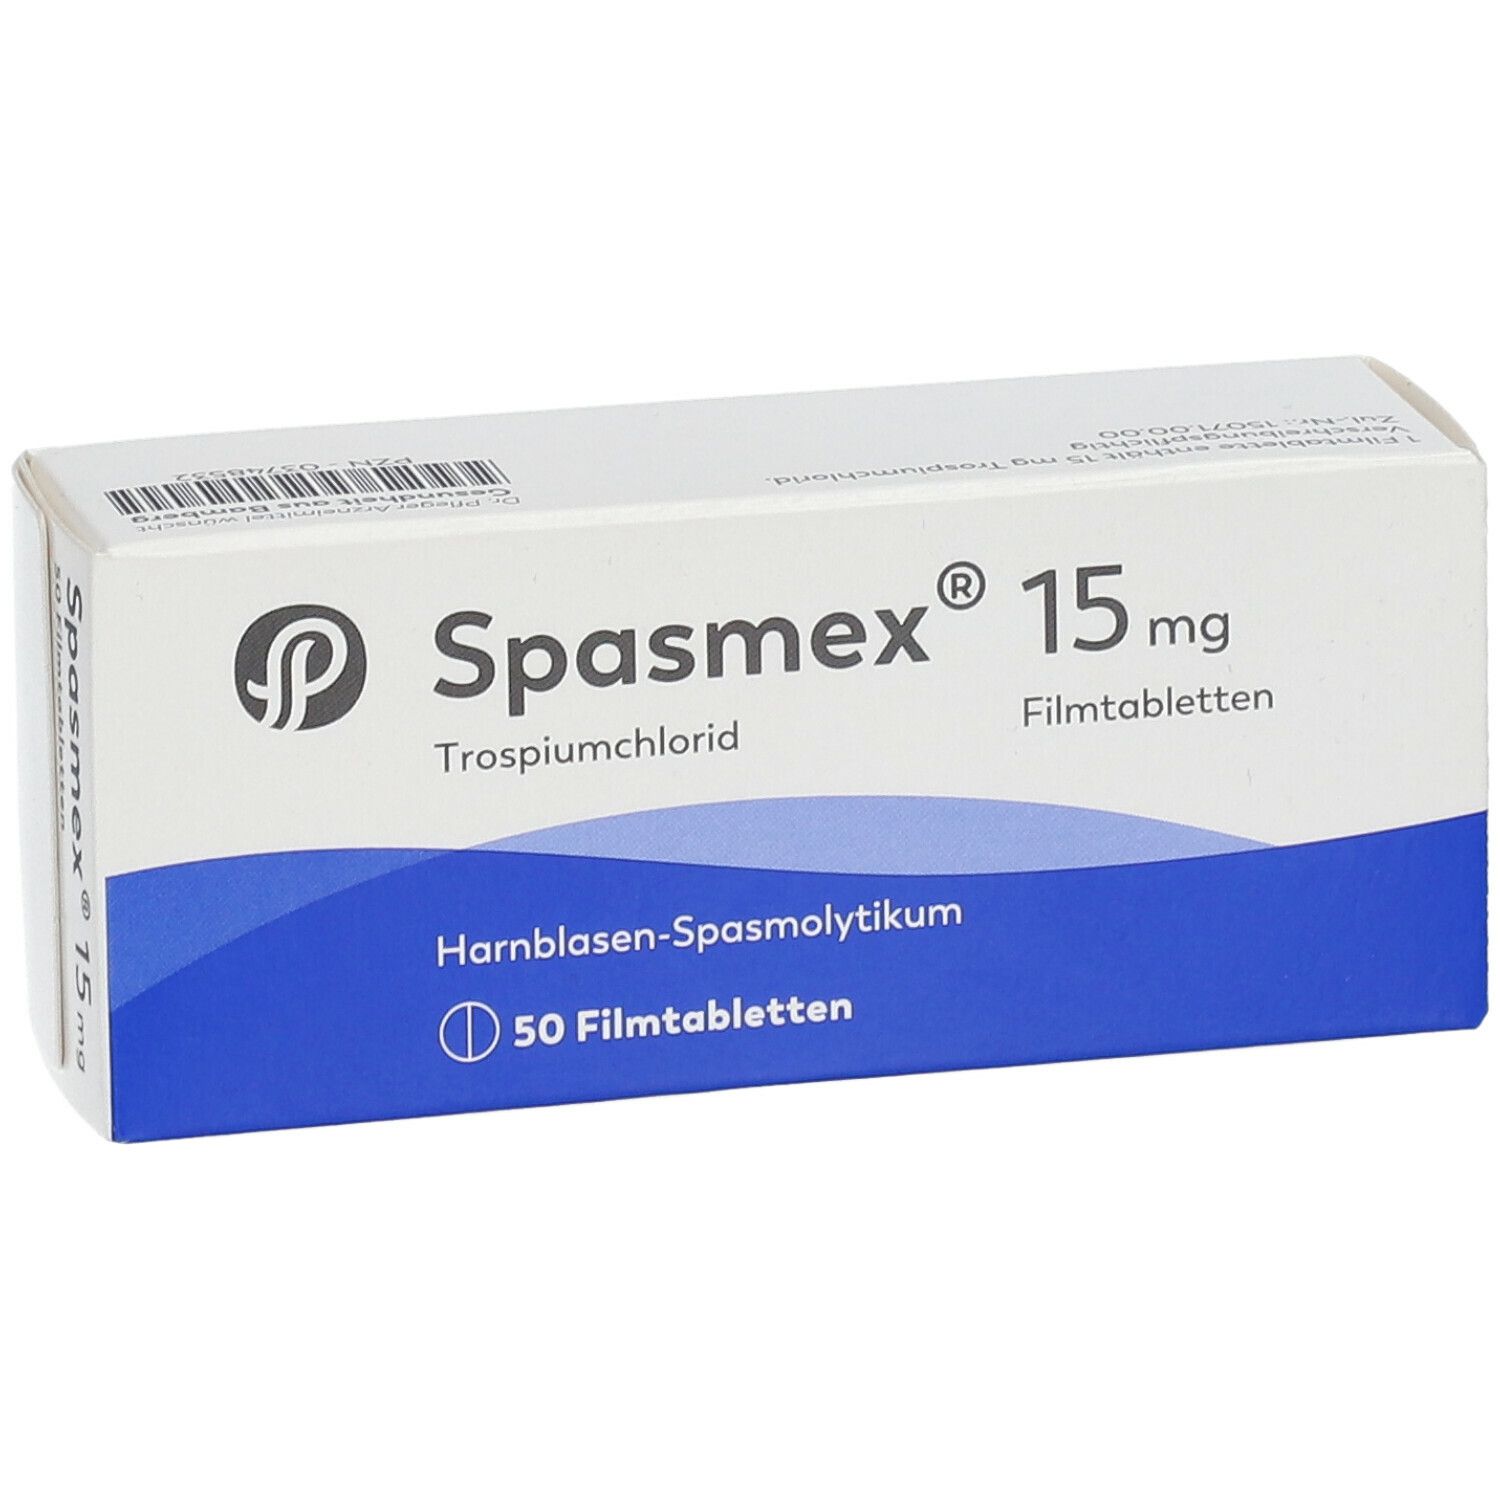 Spasmex® 15 mg